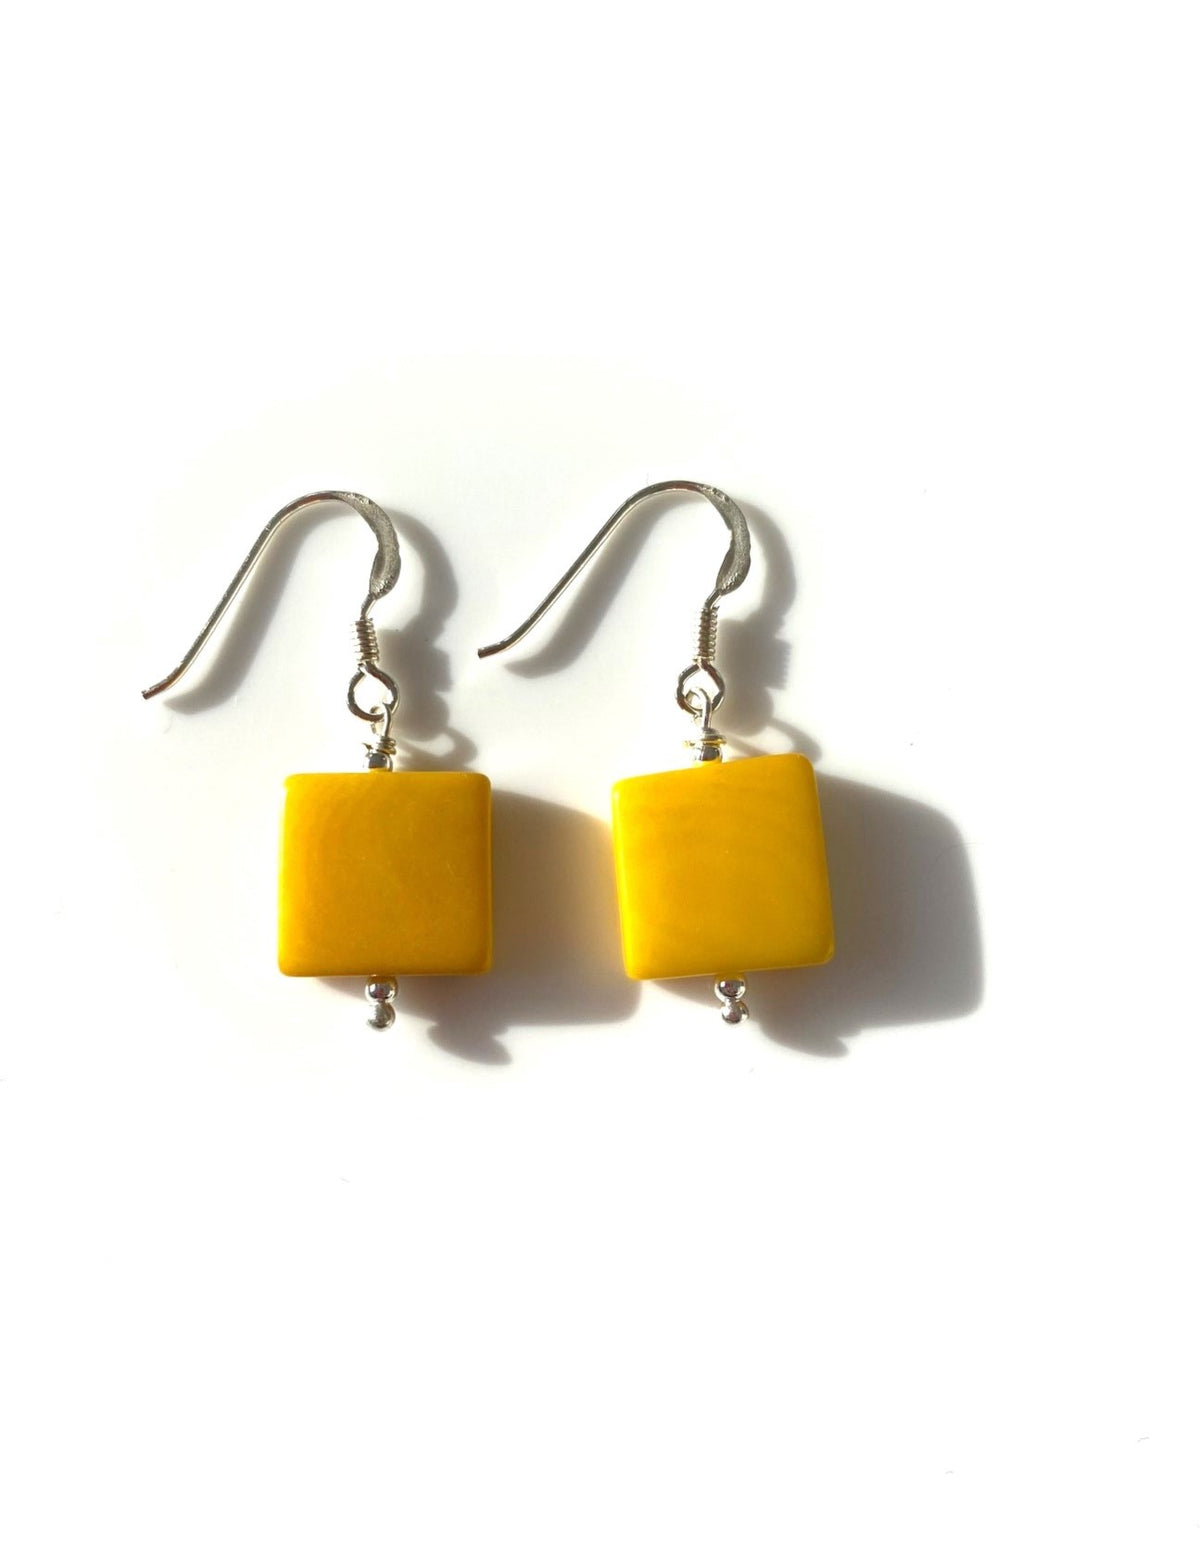 Cuadritos earrings (11mm) - Mustard/yellow